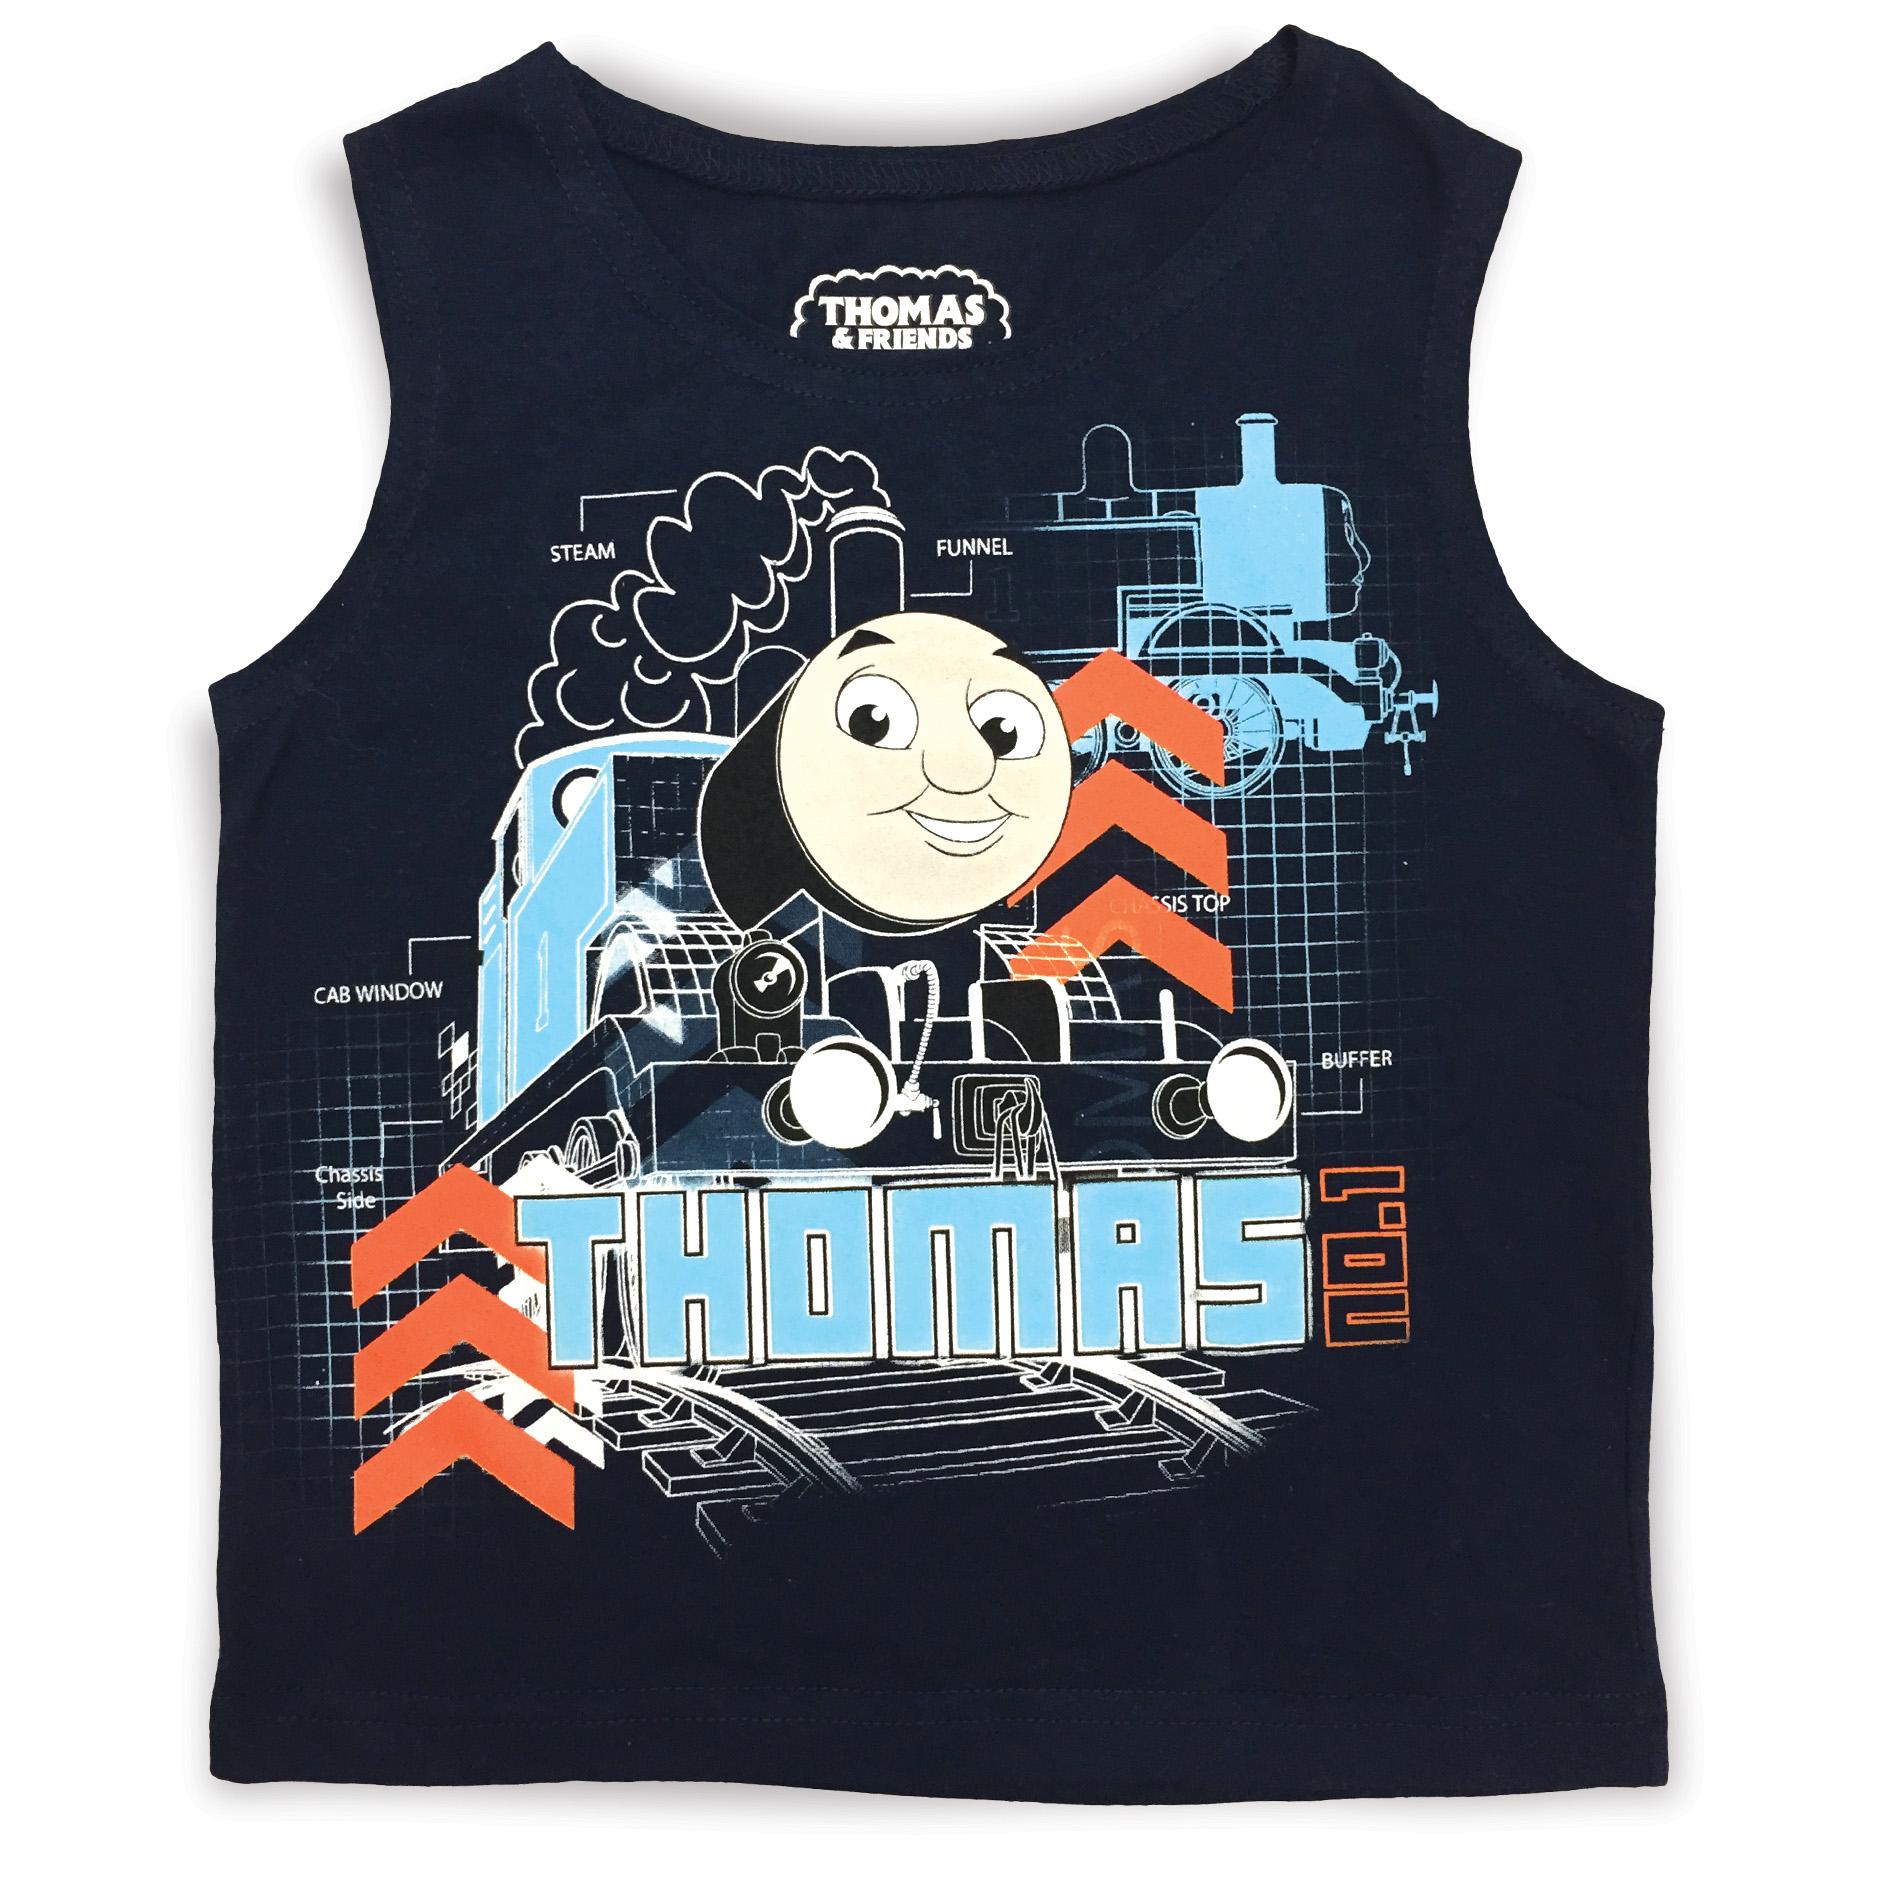 Thomas & Friends Toddler Boy's Graphic Tank Top - No. 1